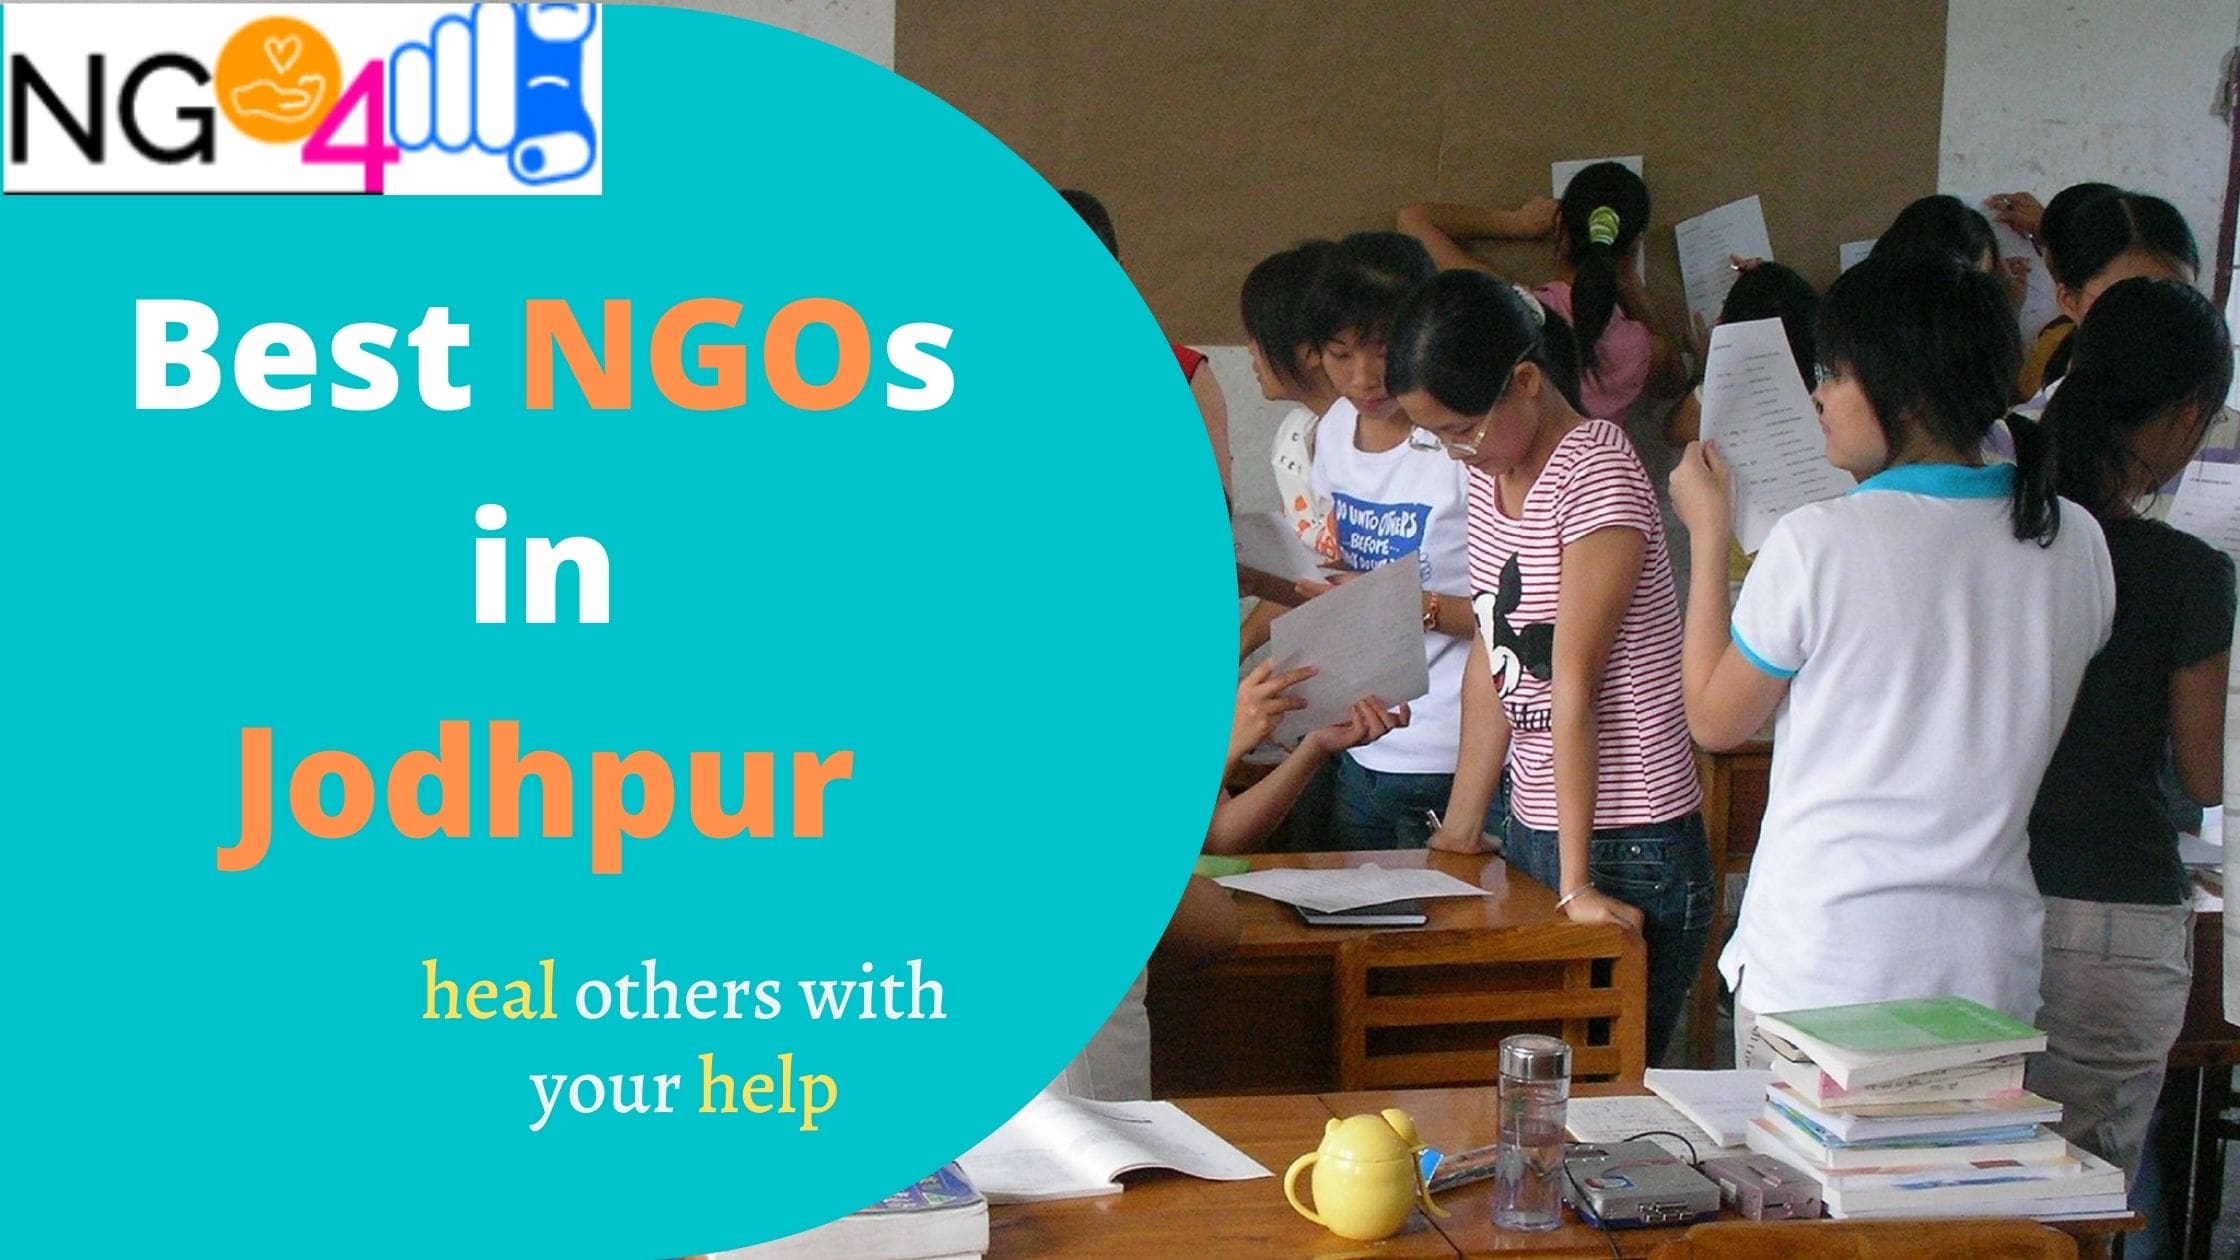 NGOs in Jodhpur